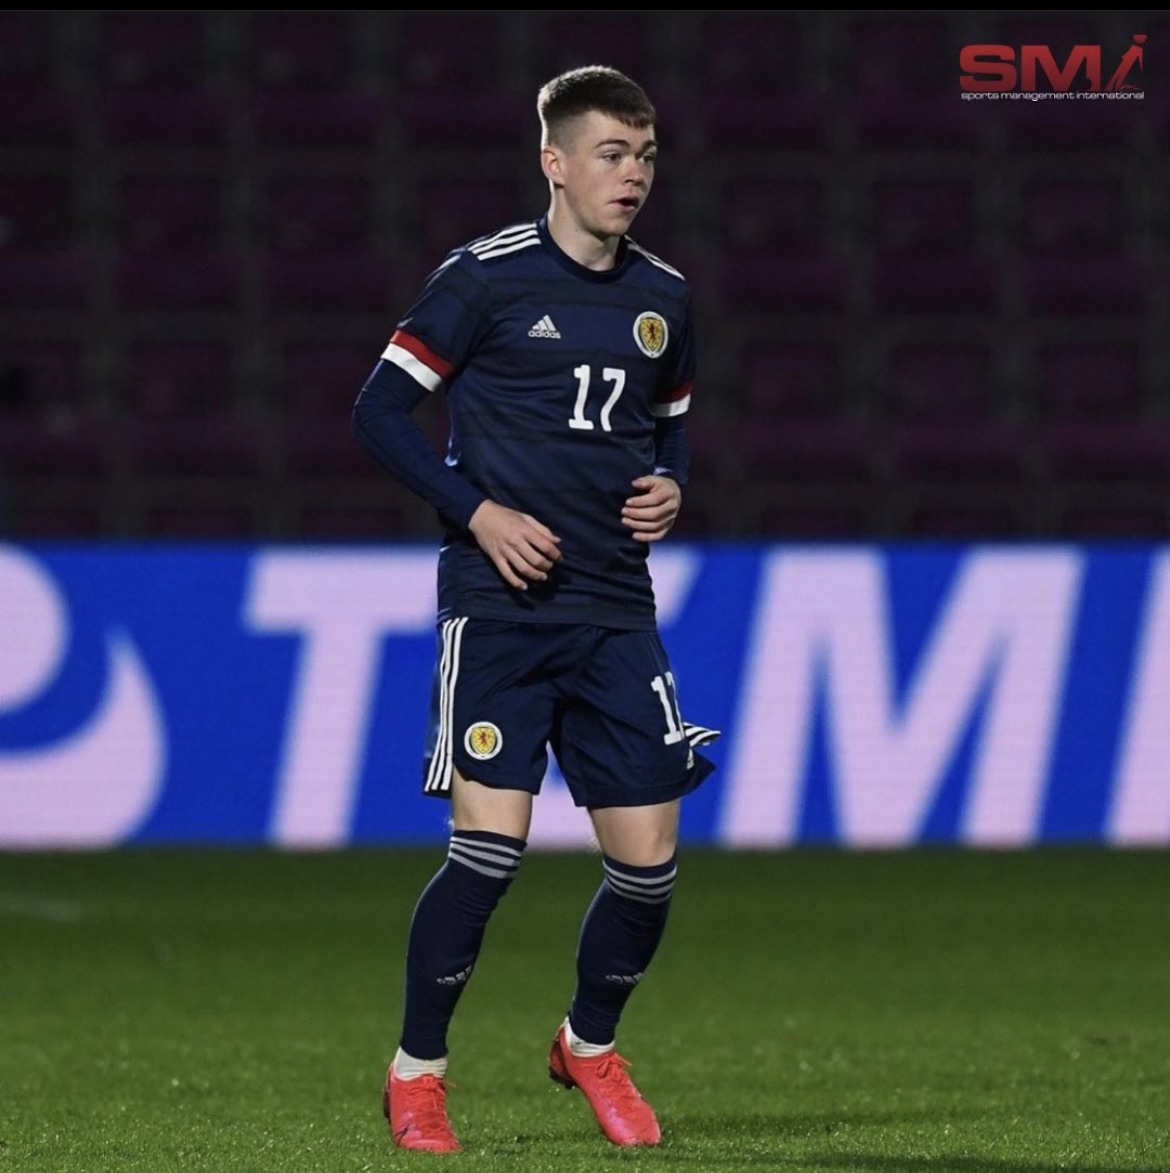 Jay Henderson Scotland U21 debut